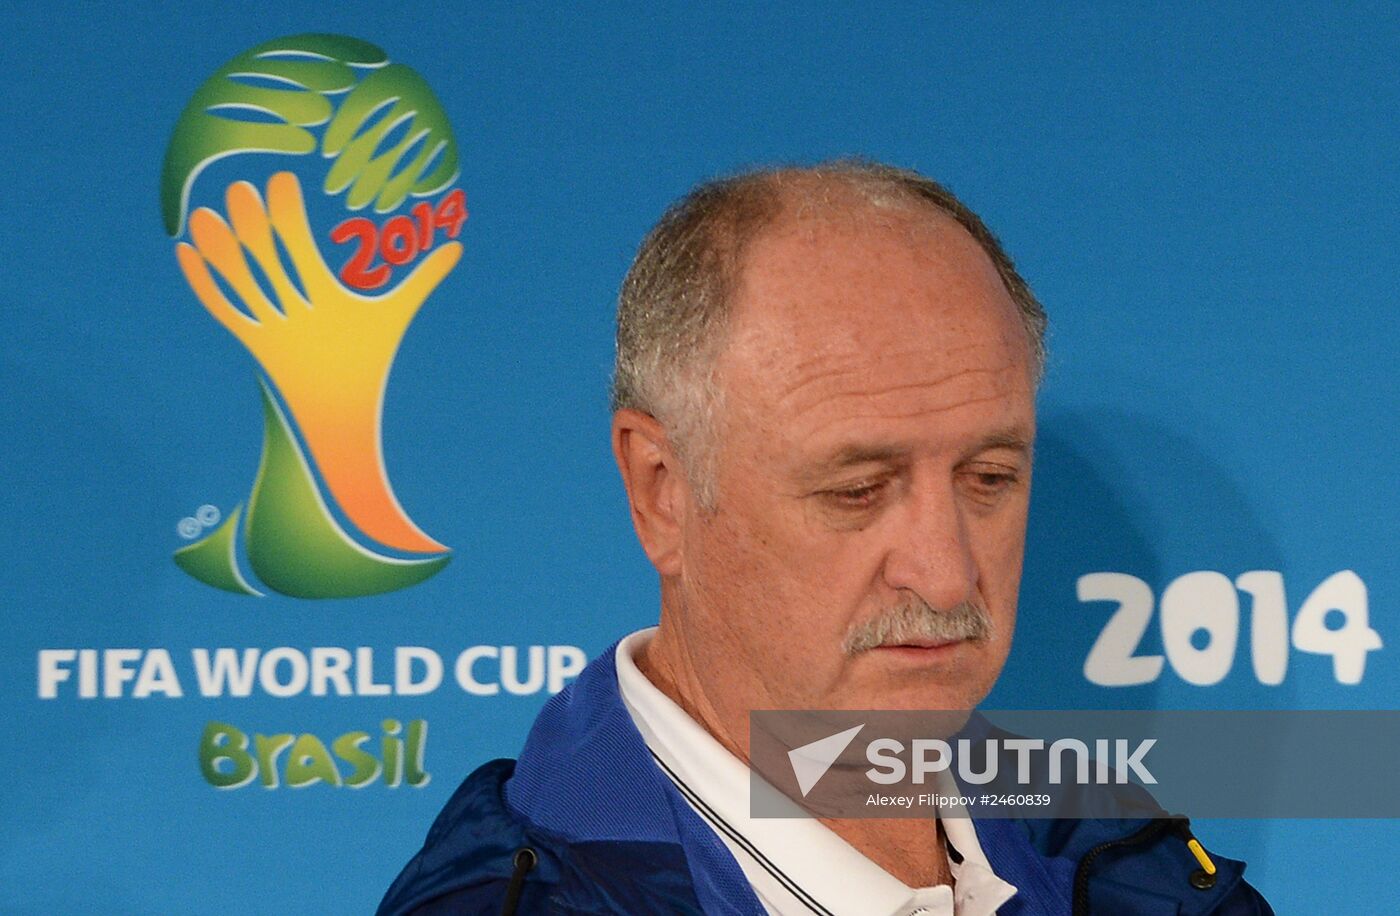 FIFA World Cup 2014. Brazilian national football team talks with journalists